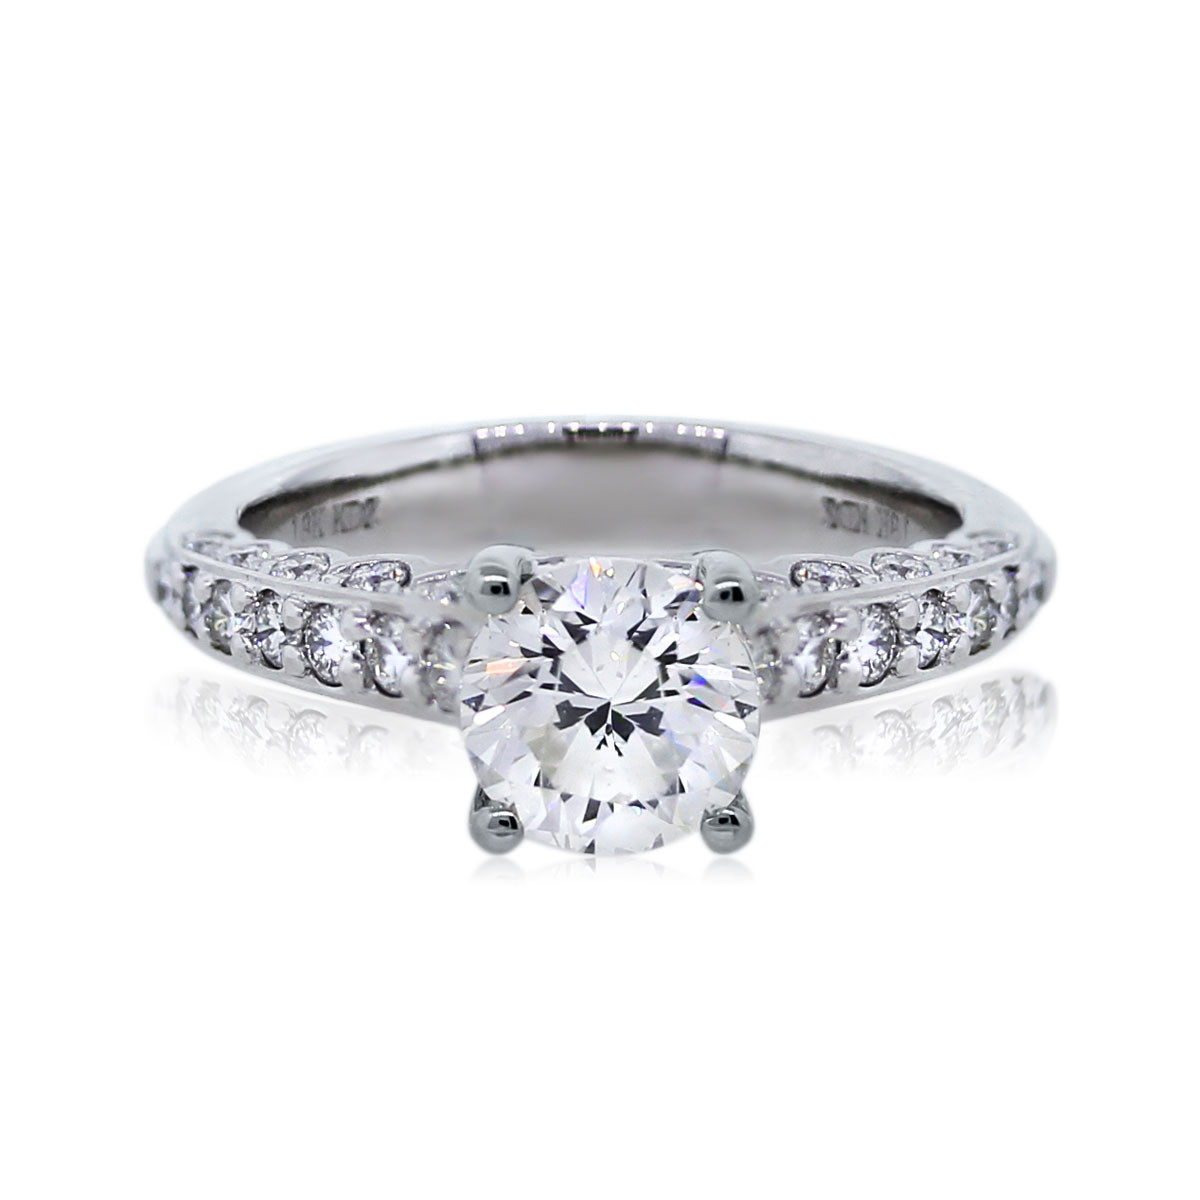 White Gold Diamond Engagement Ring
 18k White Gold 1 16ct Round Brilliant Diamond Engagement Ring